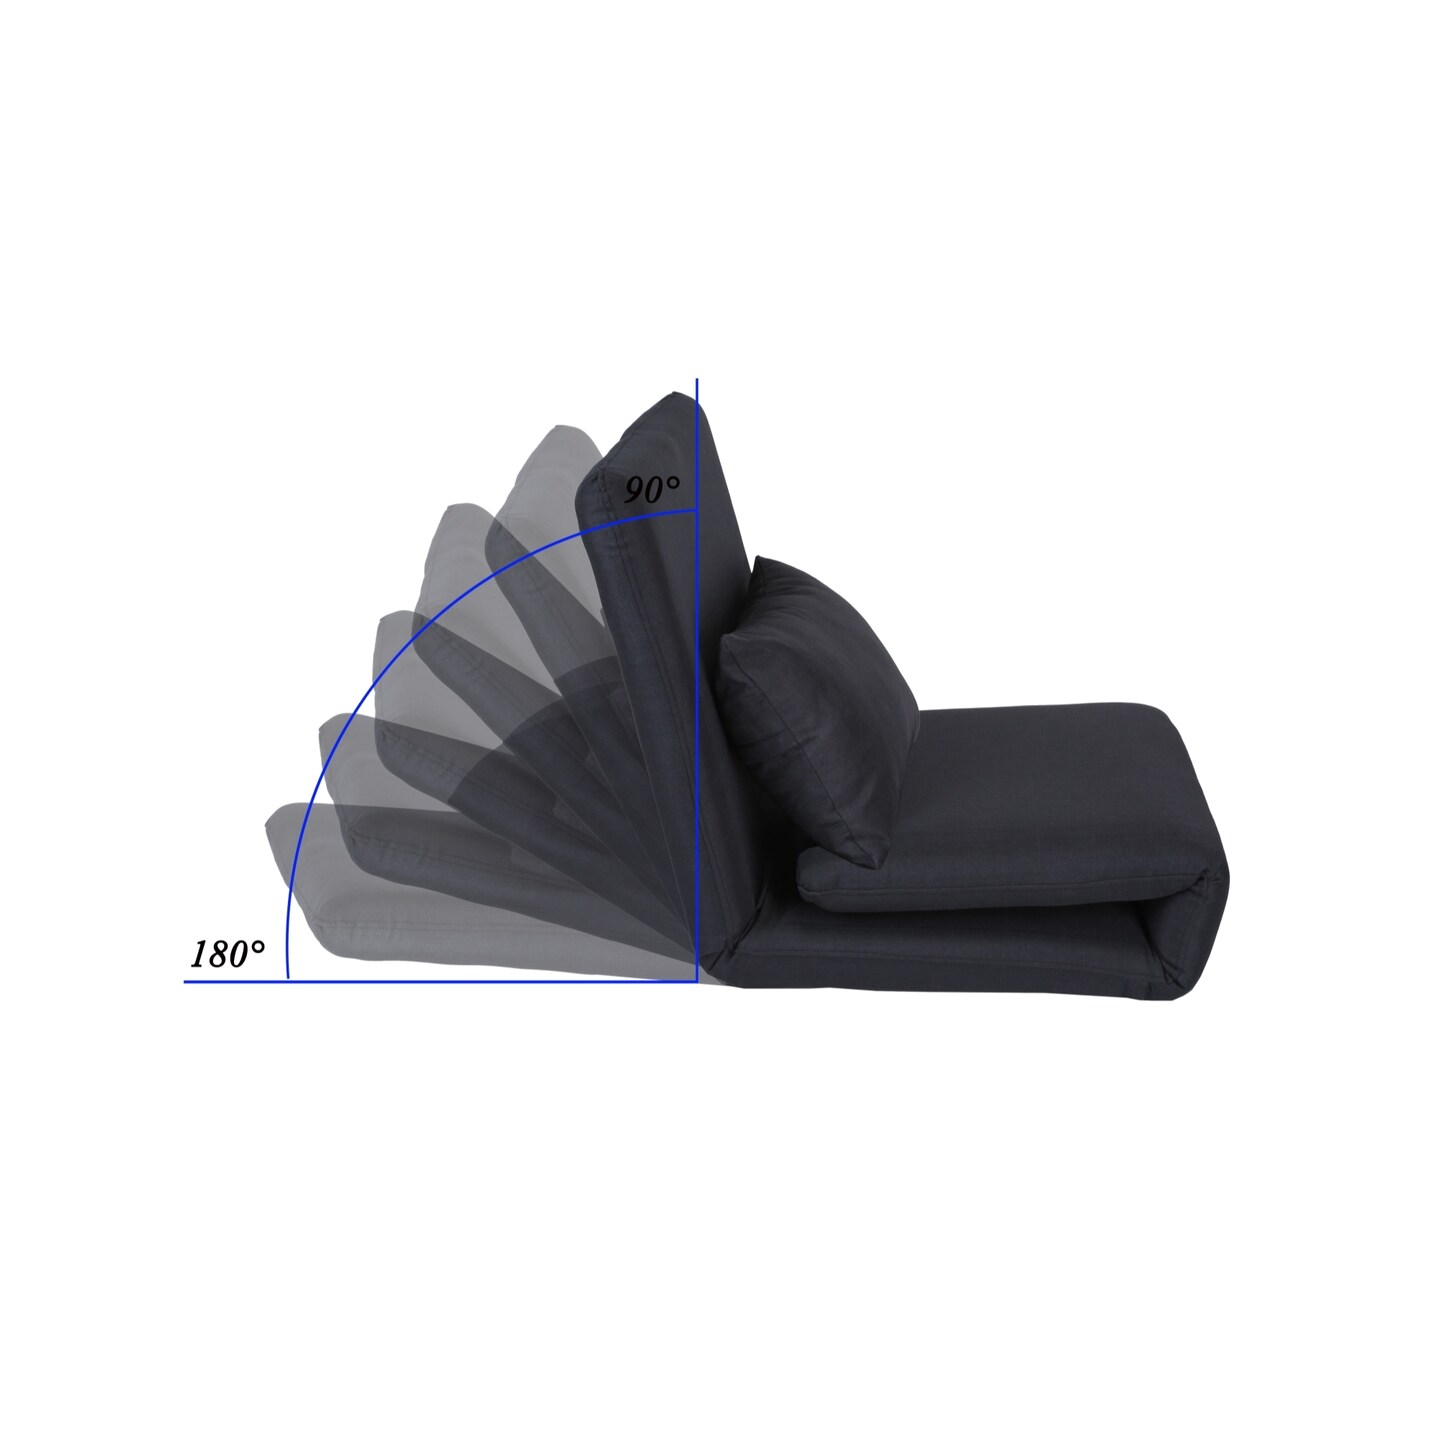 Relaxie Linen Convertible Flip Floor Chair Sleeper